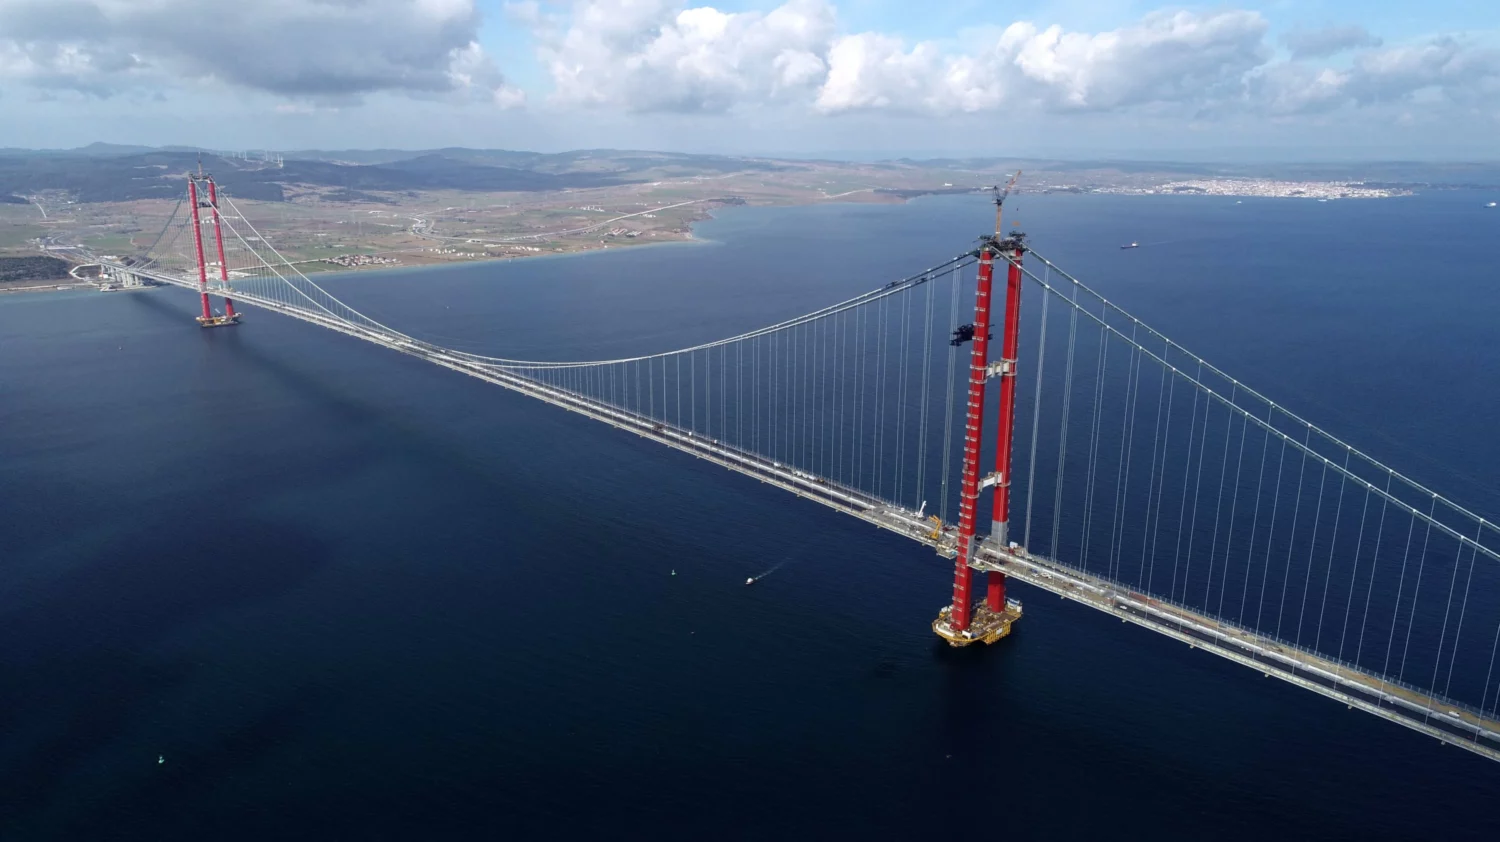 Canakkale: Η γέφυρα που ενώνει την Ευρώπη με την Ασία σε έξι λεπτά